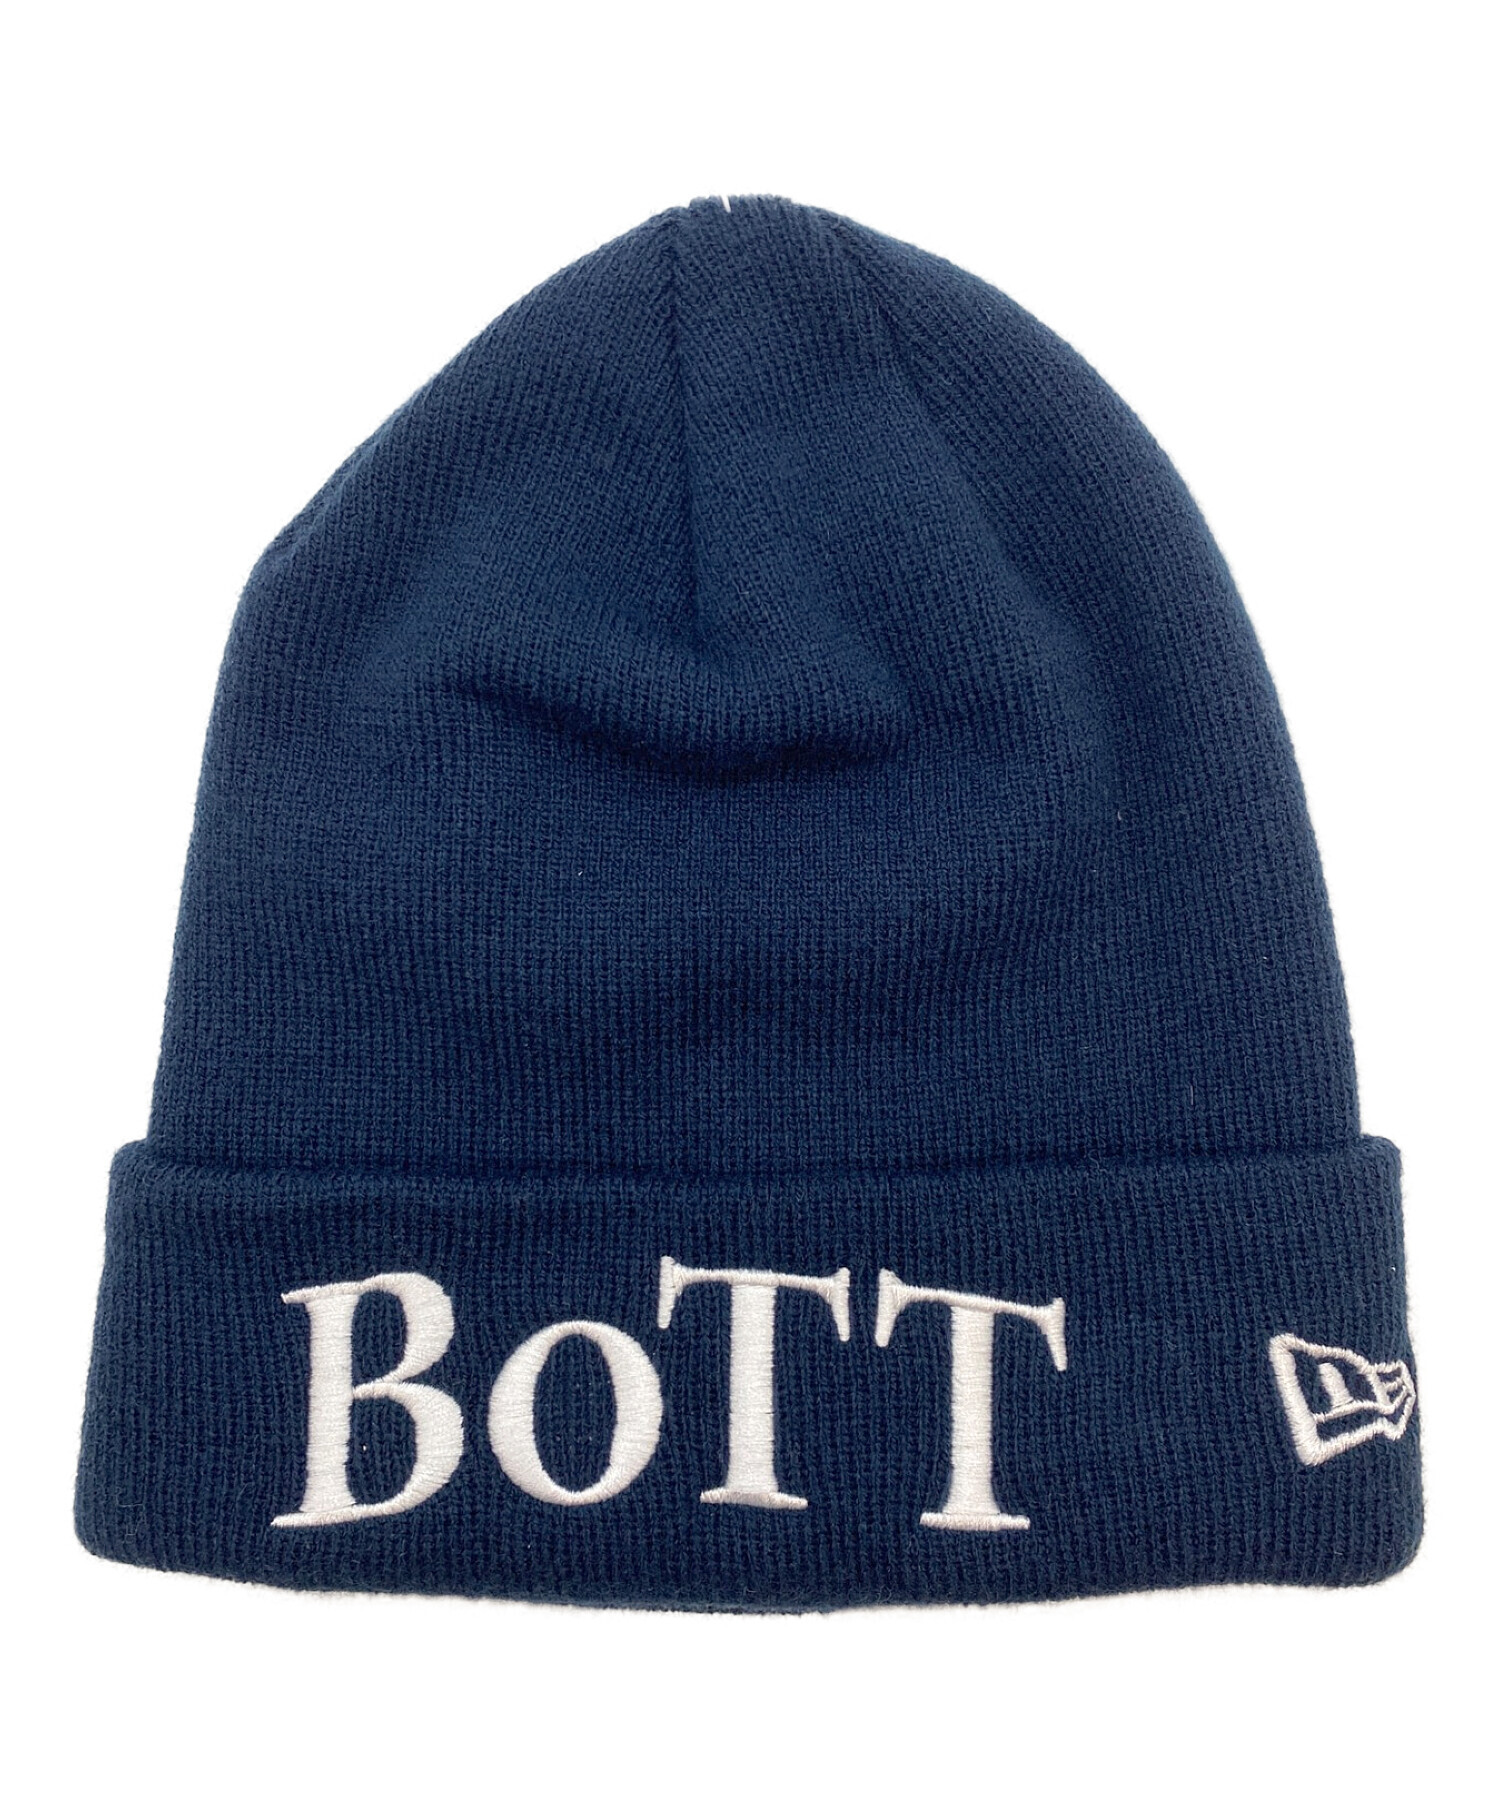 BoTT (ボット) New Era (ニューエラ) コラボニット帽 ネイビー